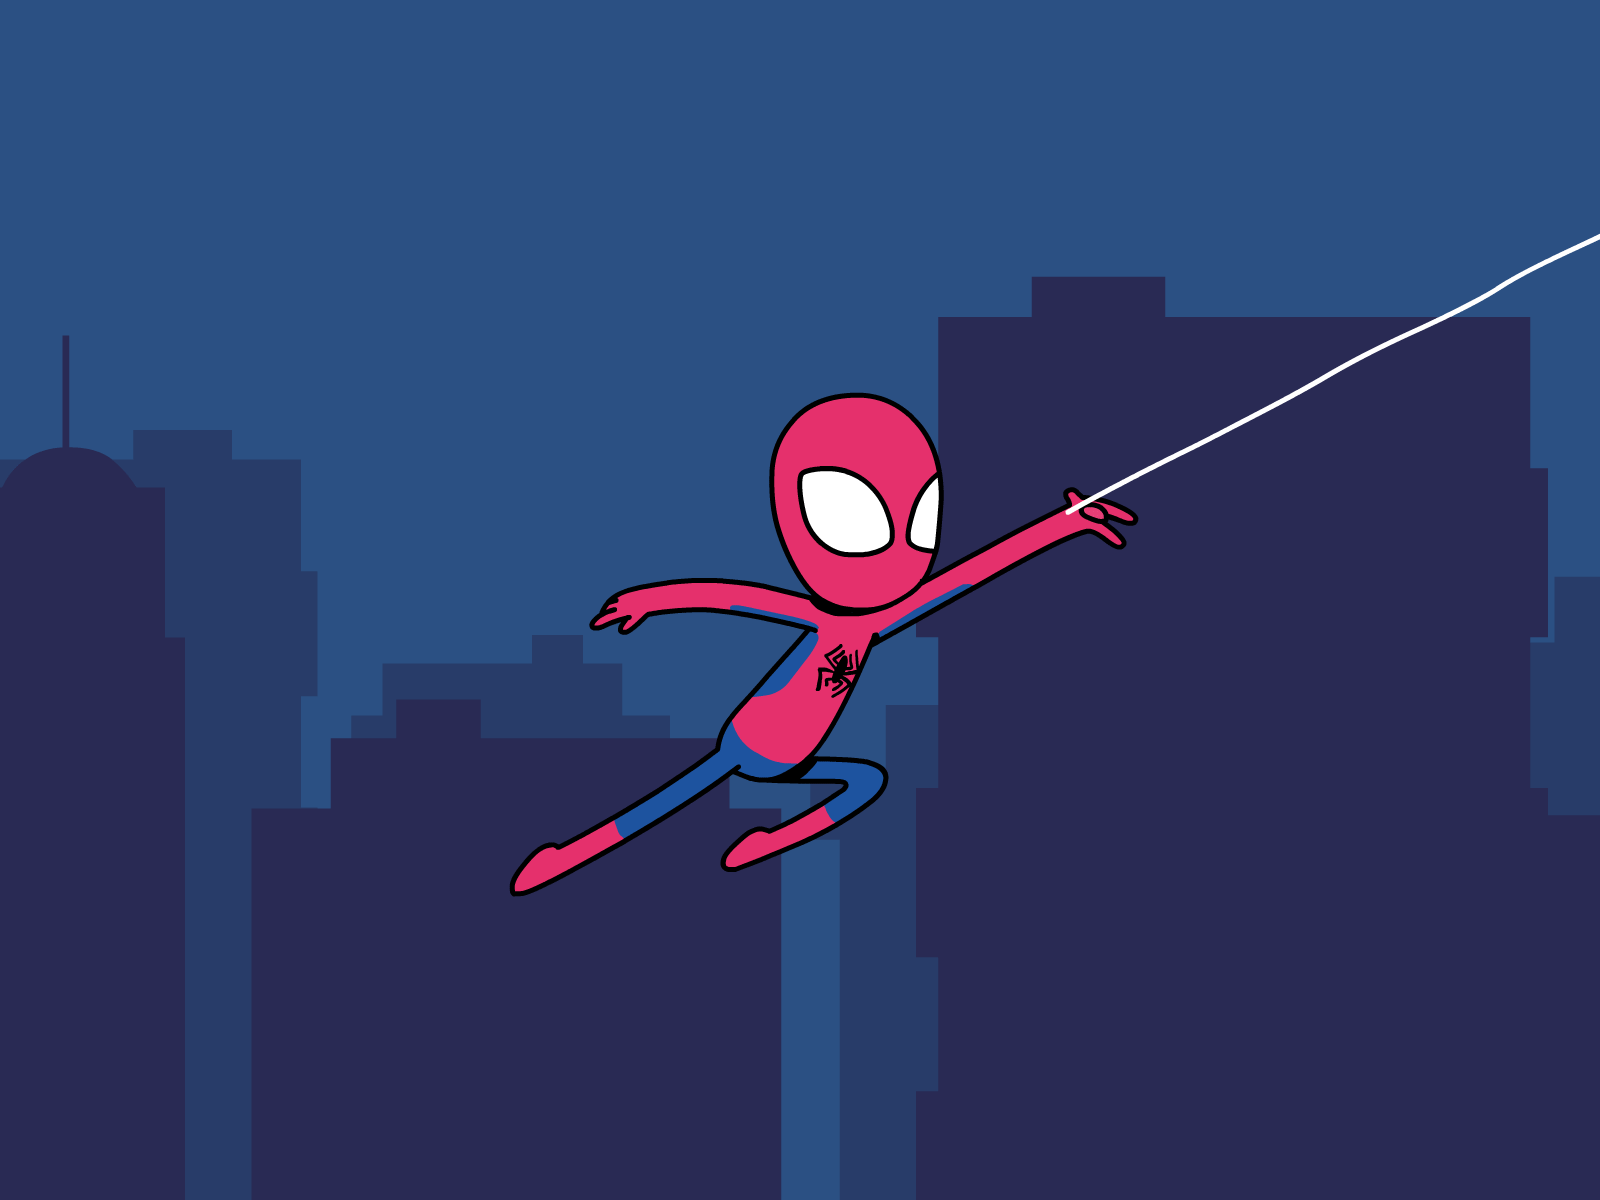 Spider Man 2d animation animation cartoon cute frame by frame framebyframe loop spiderman superhero